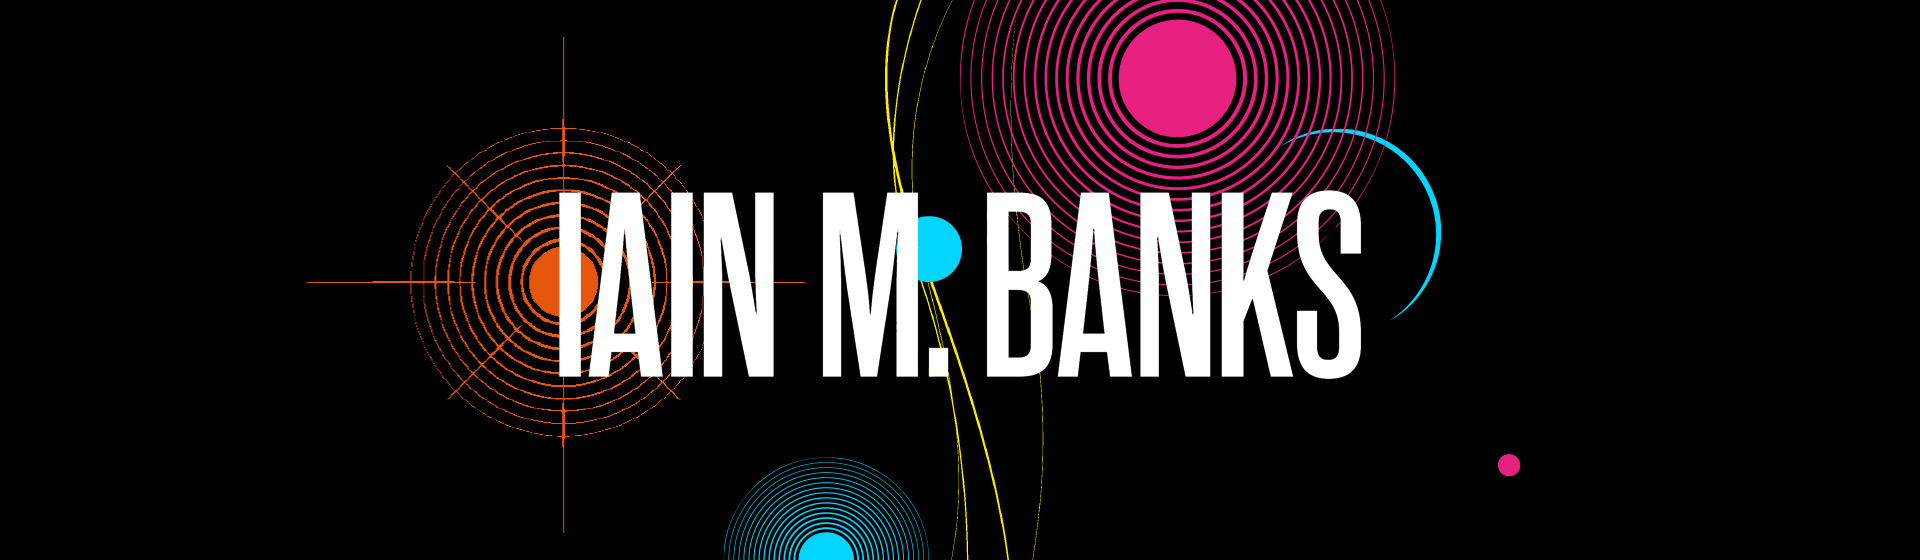 https://www.iain-banks.net/wp-content/uploads/2019/10/IAIN-BANKS_banner_2-1.jpg?w=1920&h=560&crop=1